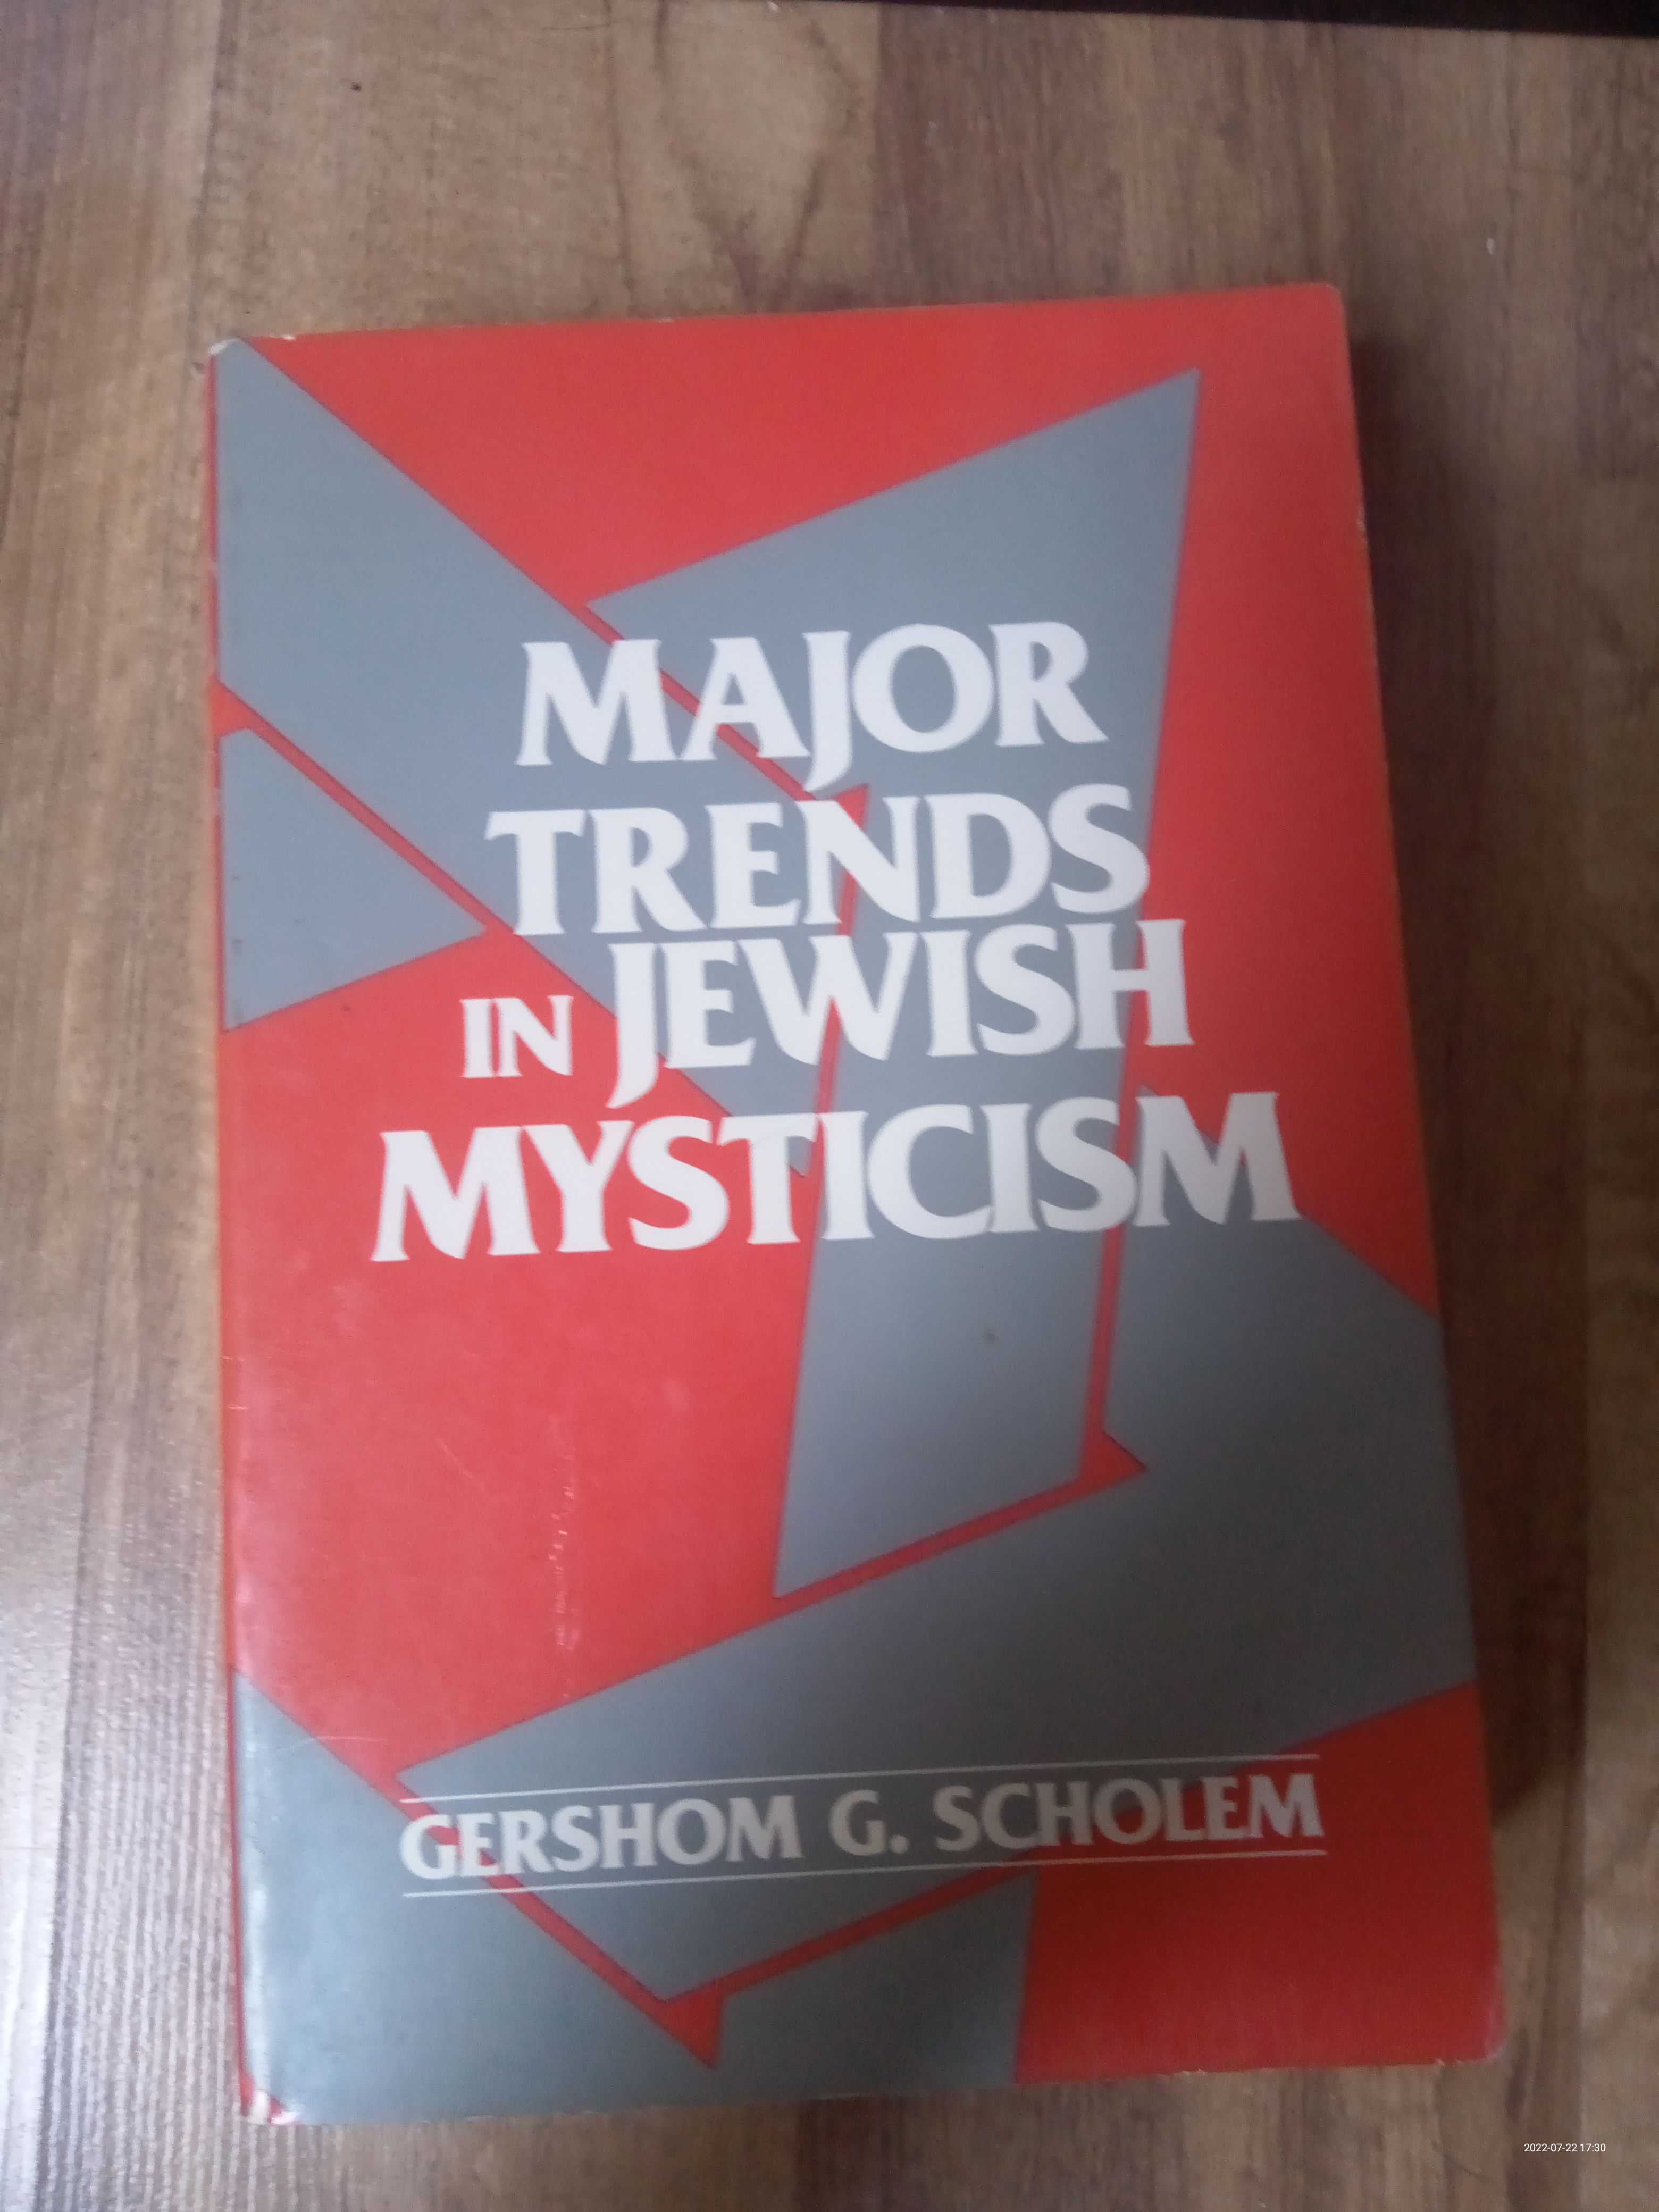 Major trends in jewish misticyzm G.G. Scholem